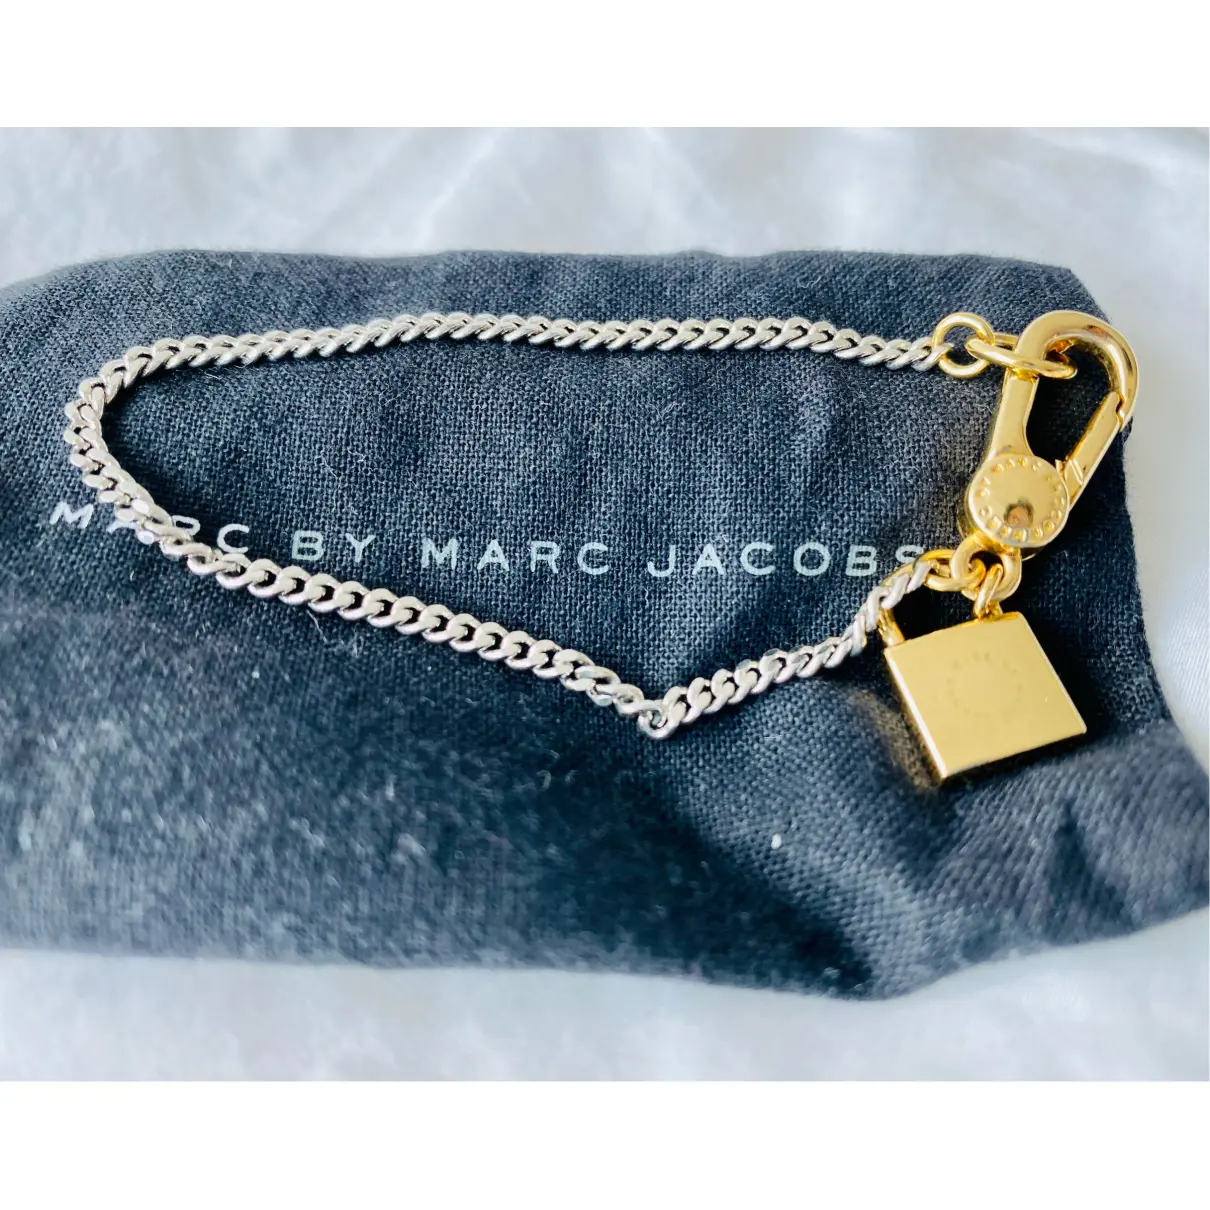 Buy Marc Jacobs Bracelet online